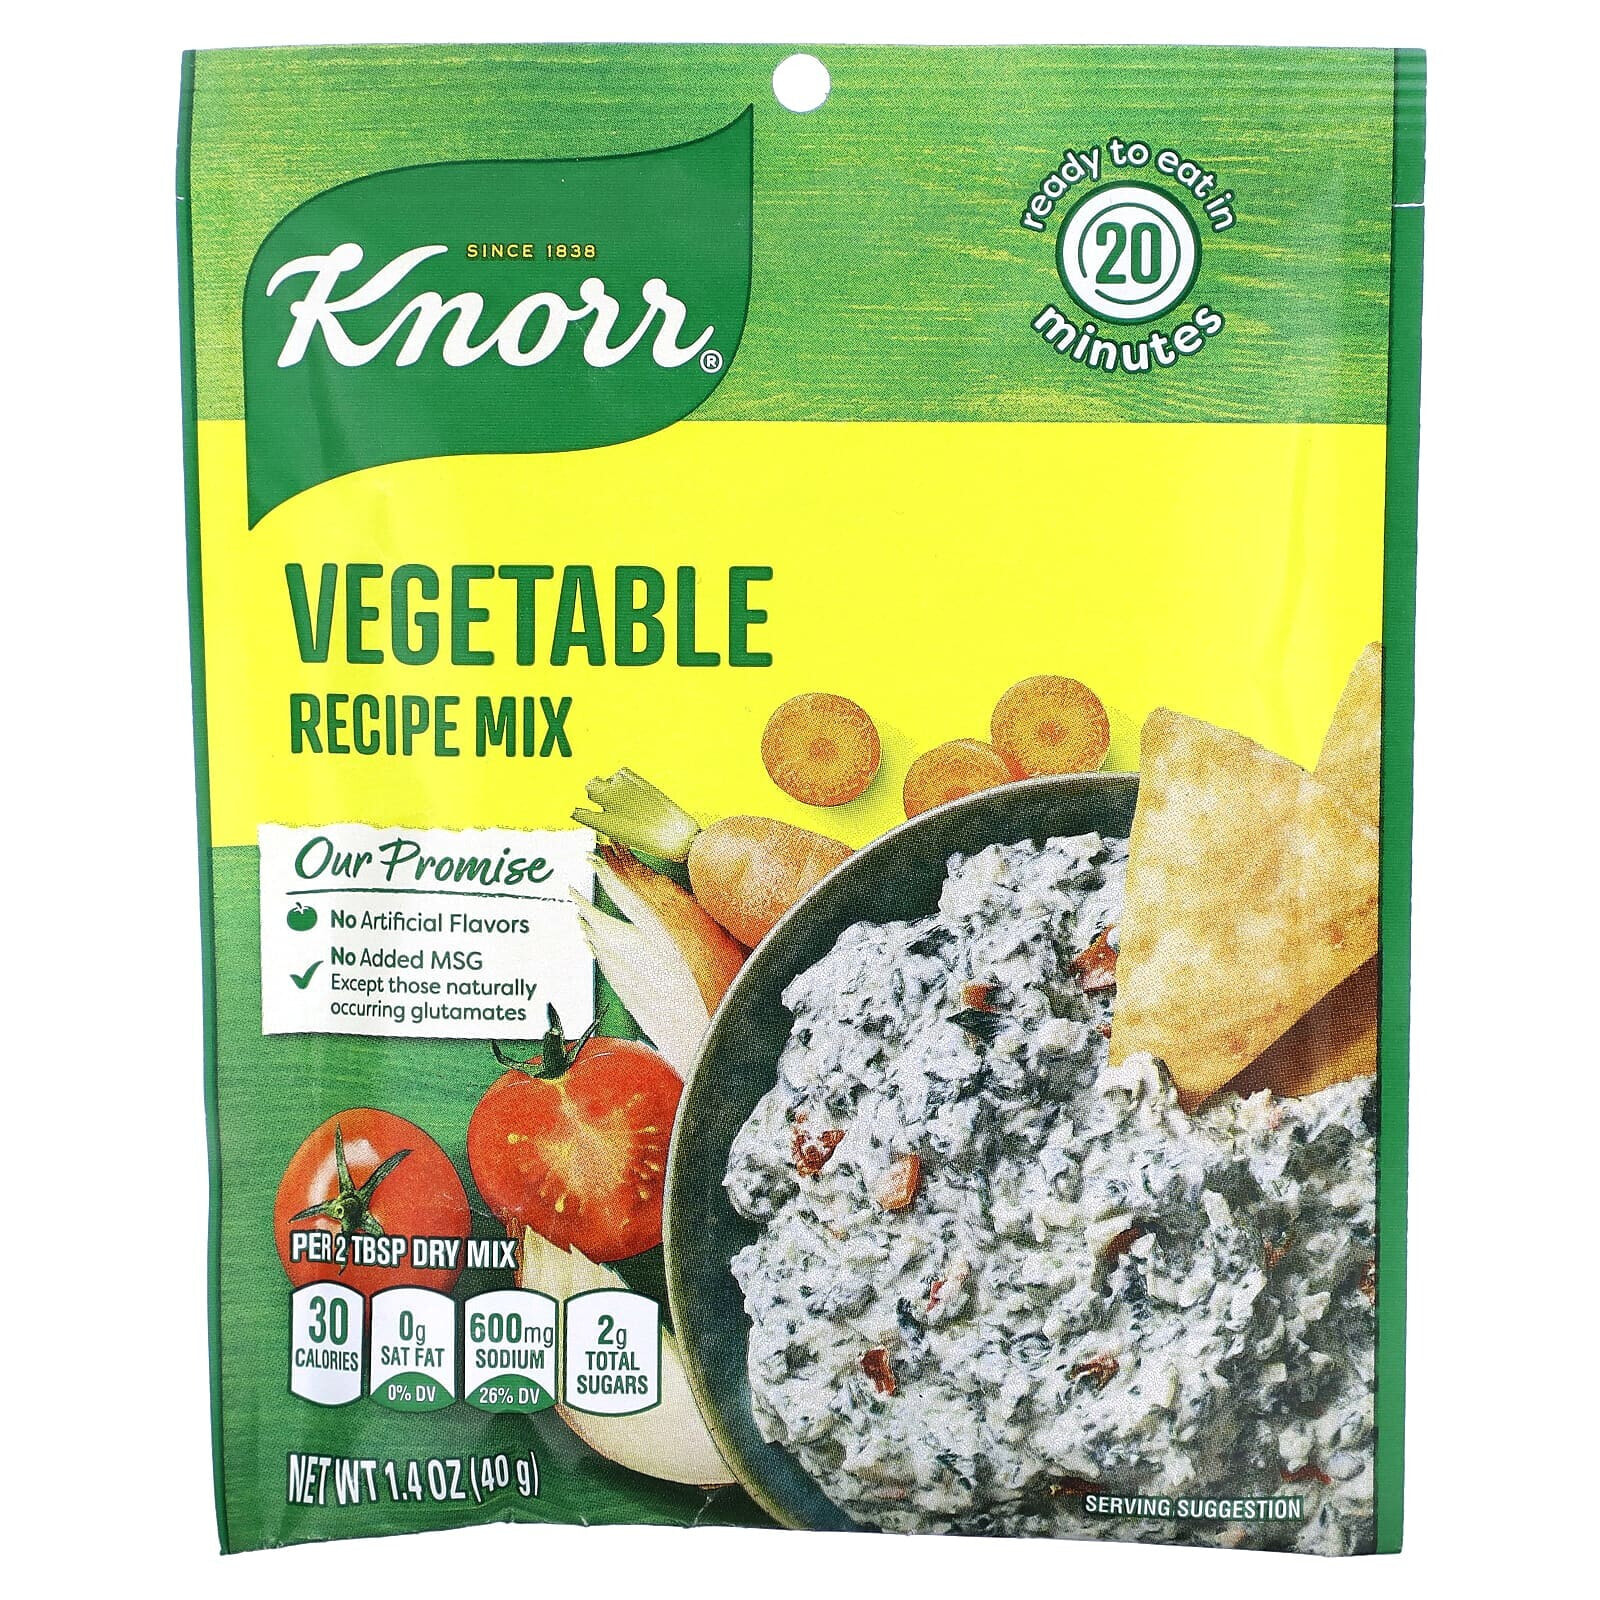 Knorr, Leek Recipe Mix, 1.8 oz (51 g)